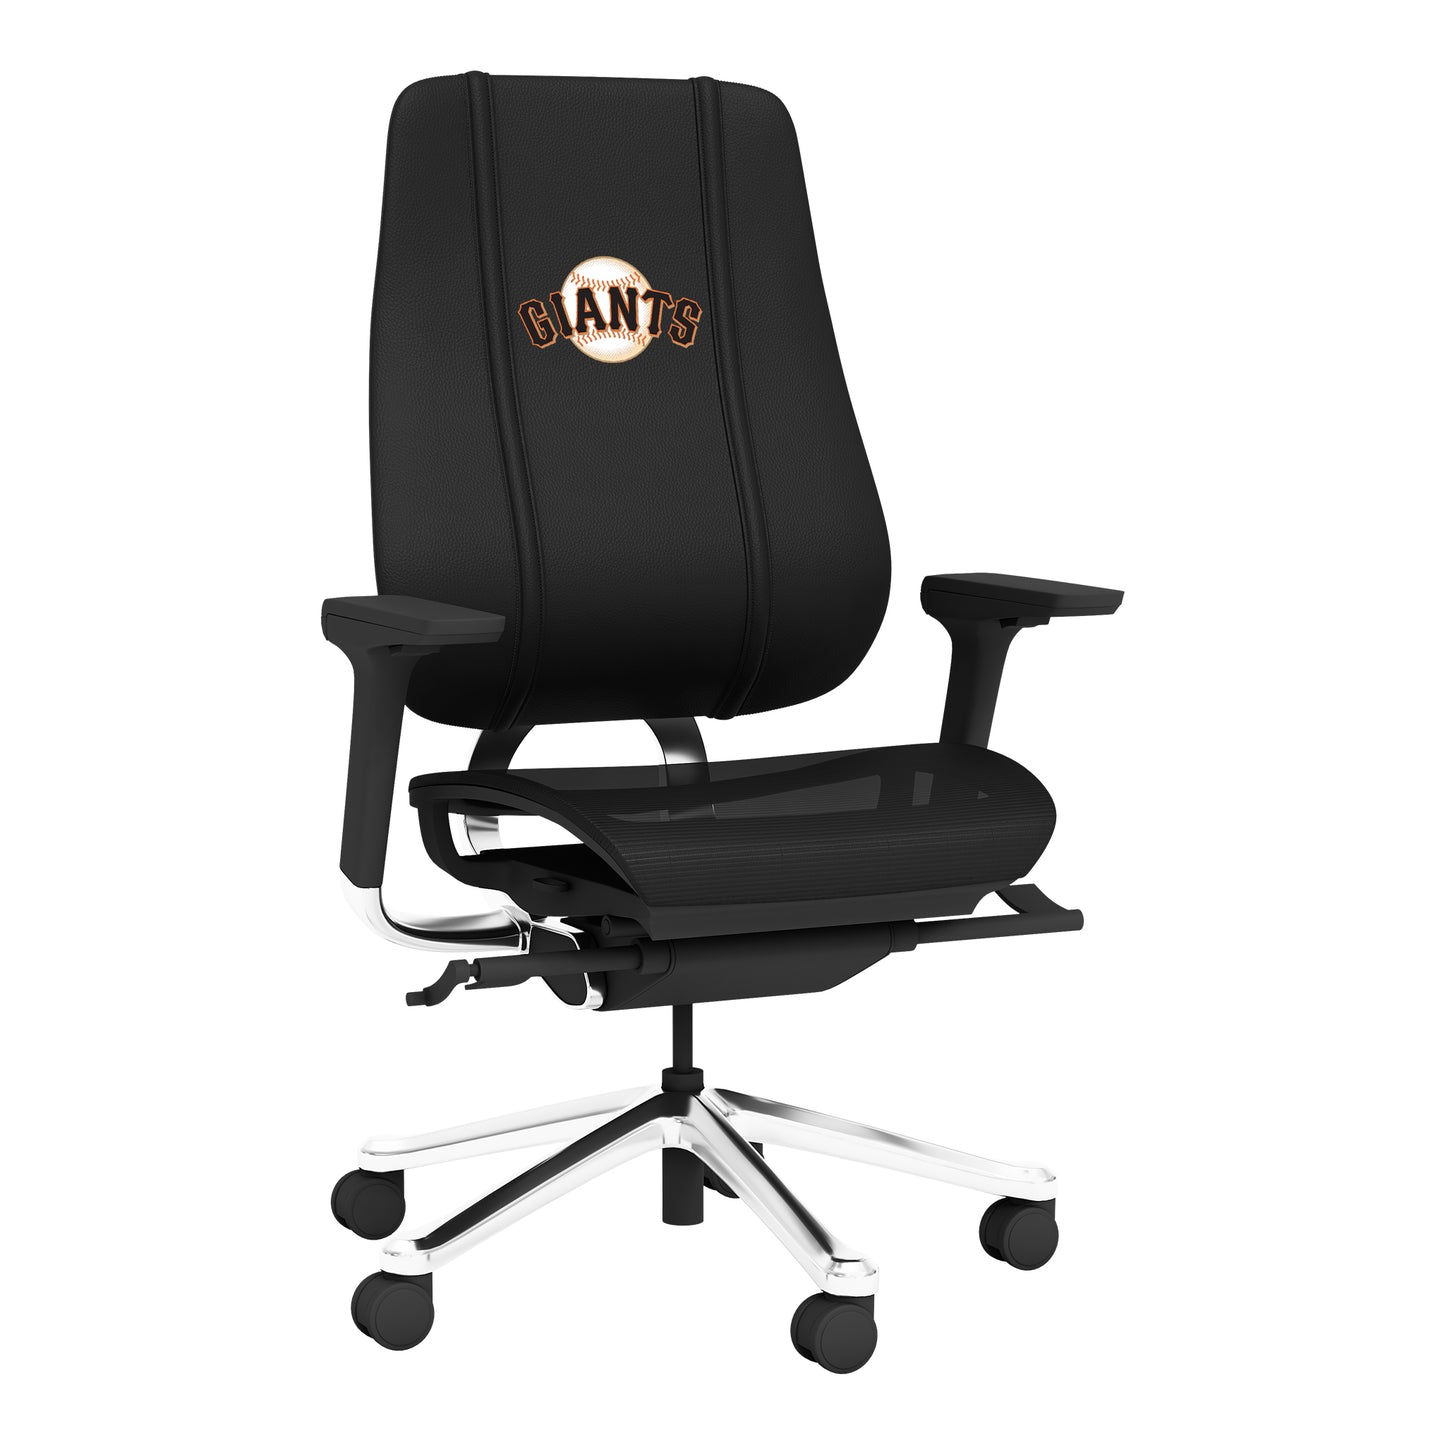 PhantomX Mesh Gaming Chair with San Francisco Giants Logo